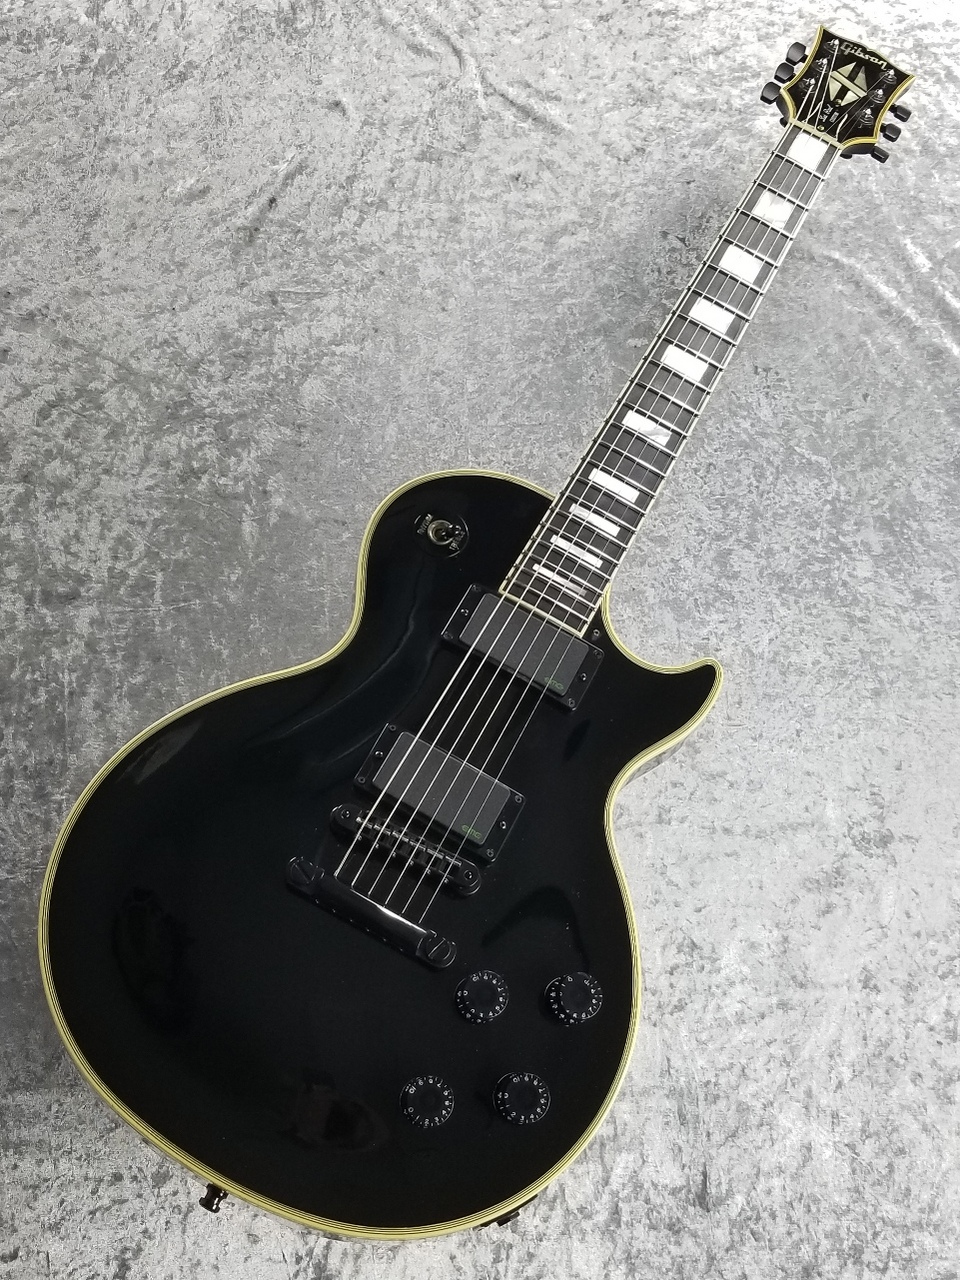 Gibson 1989 Les Paul Custom Mod [ Like a Metalica Kirk Hammett 